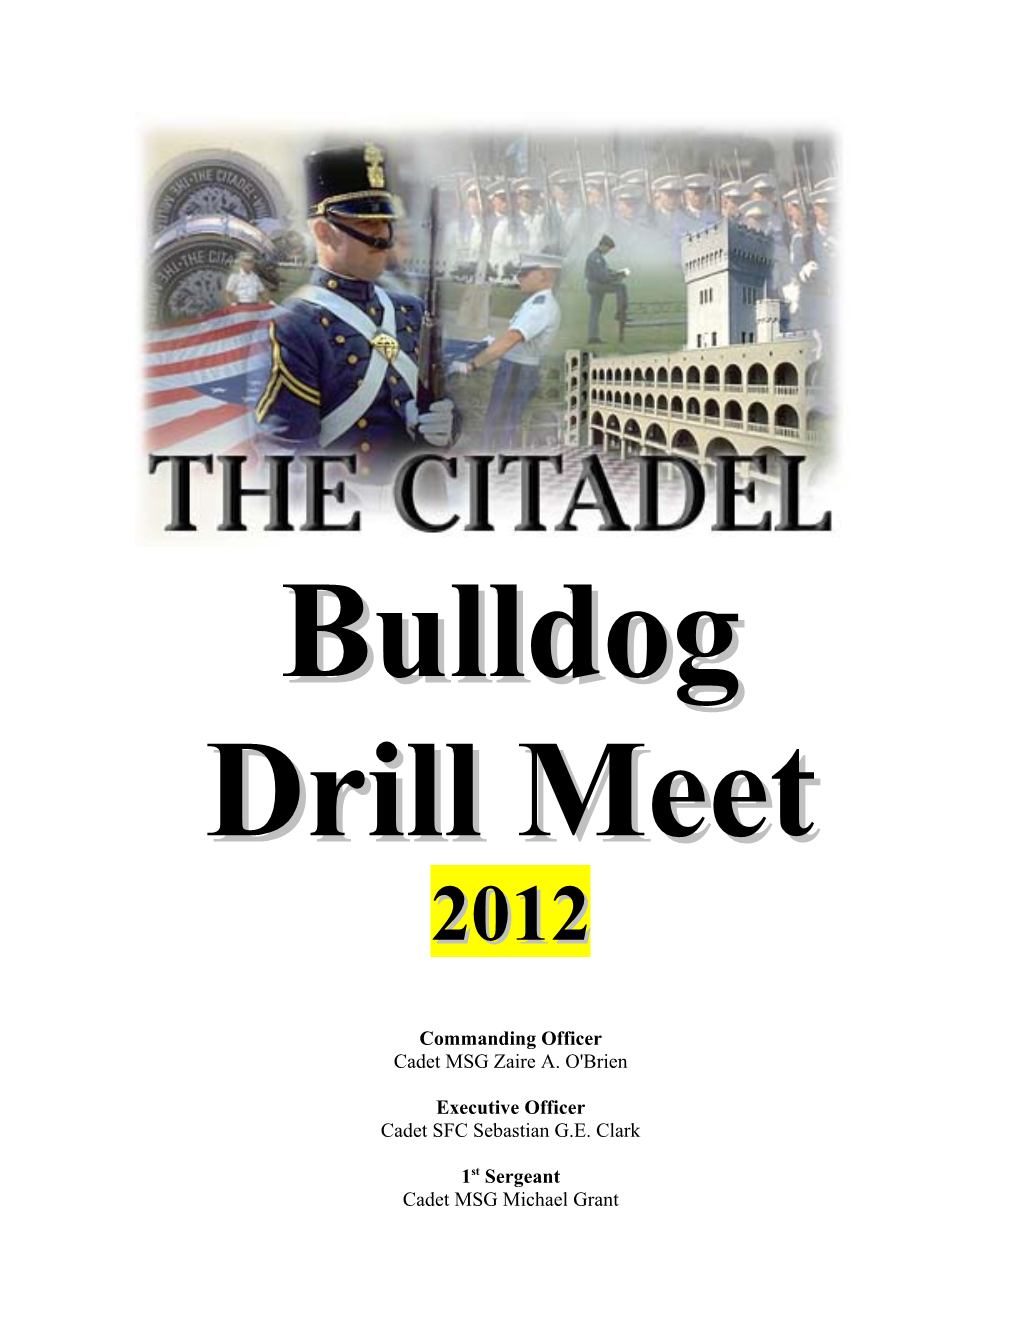 From: the Rifle Legion Drill Team, the Citadel, Charleston, SC